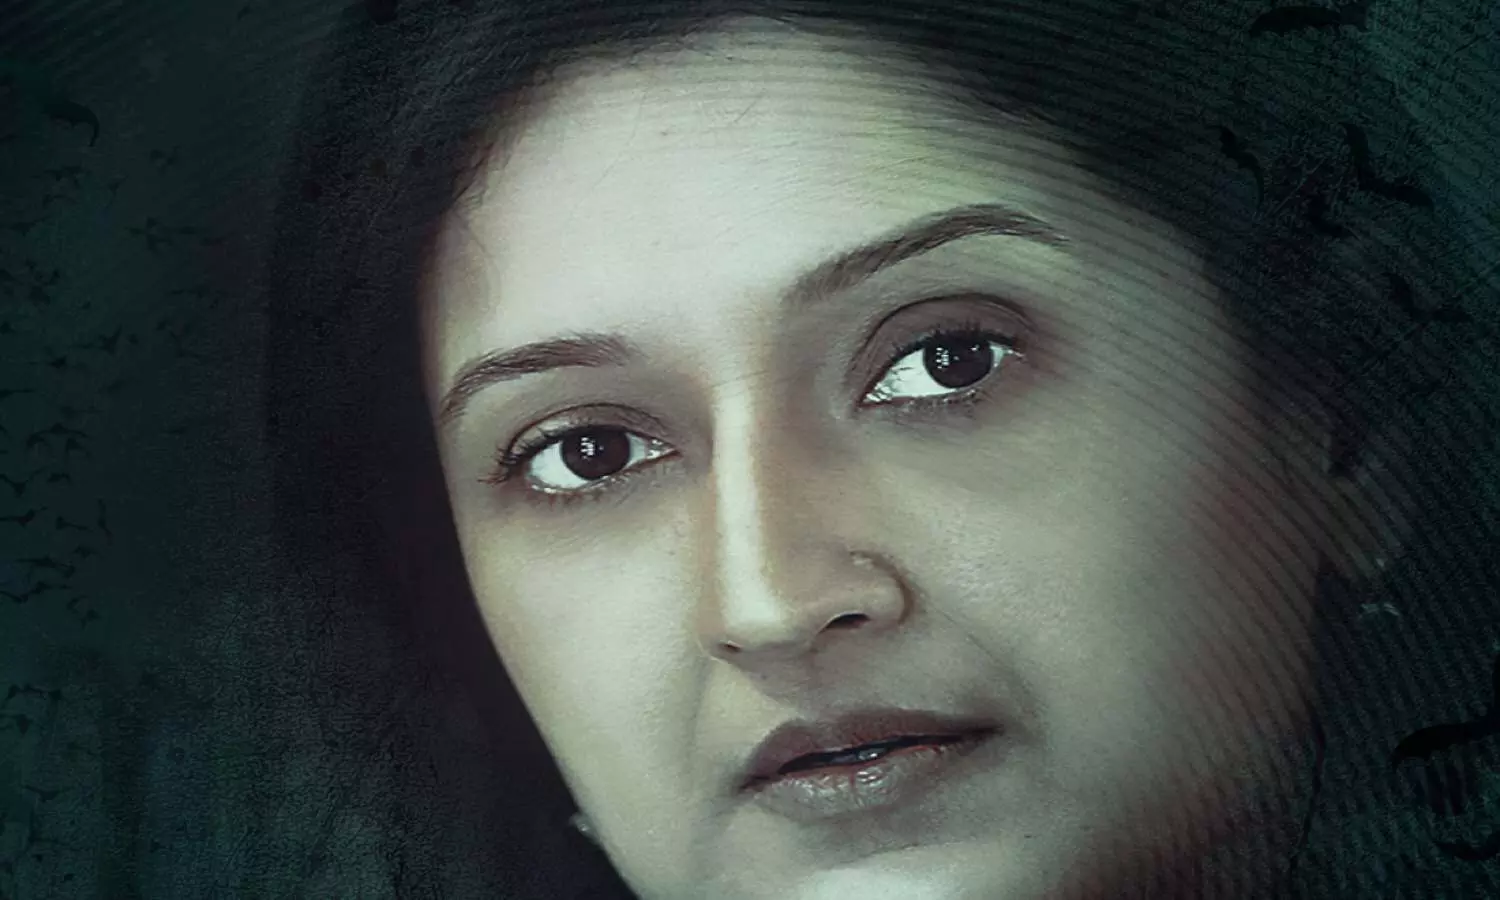 Actress Laila - మరో కీలక పాత్రలో లైలా